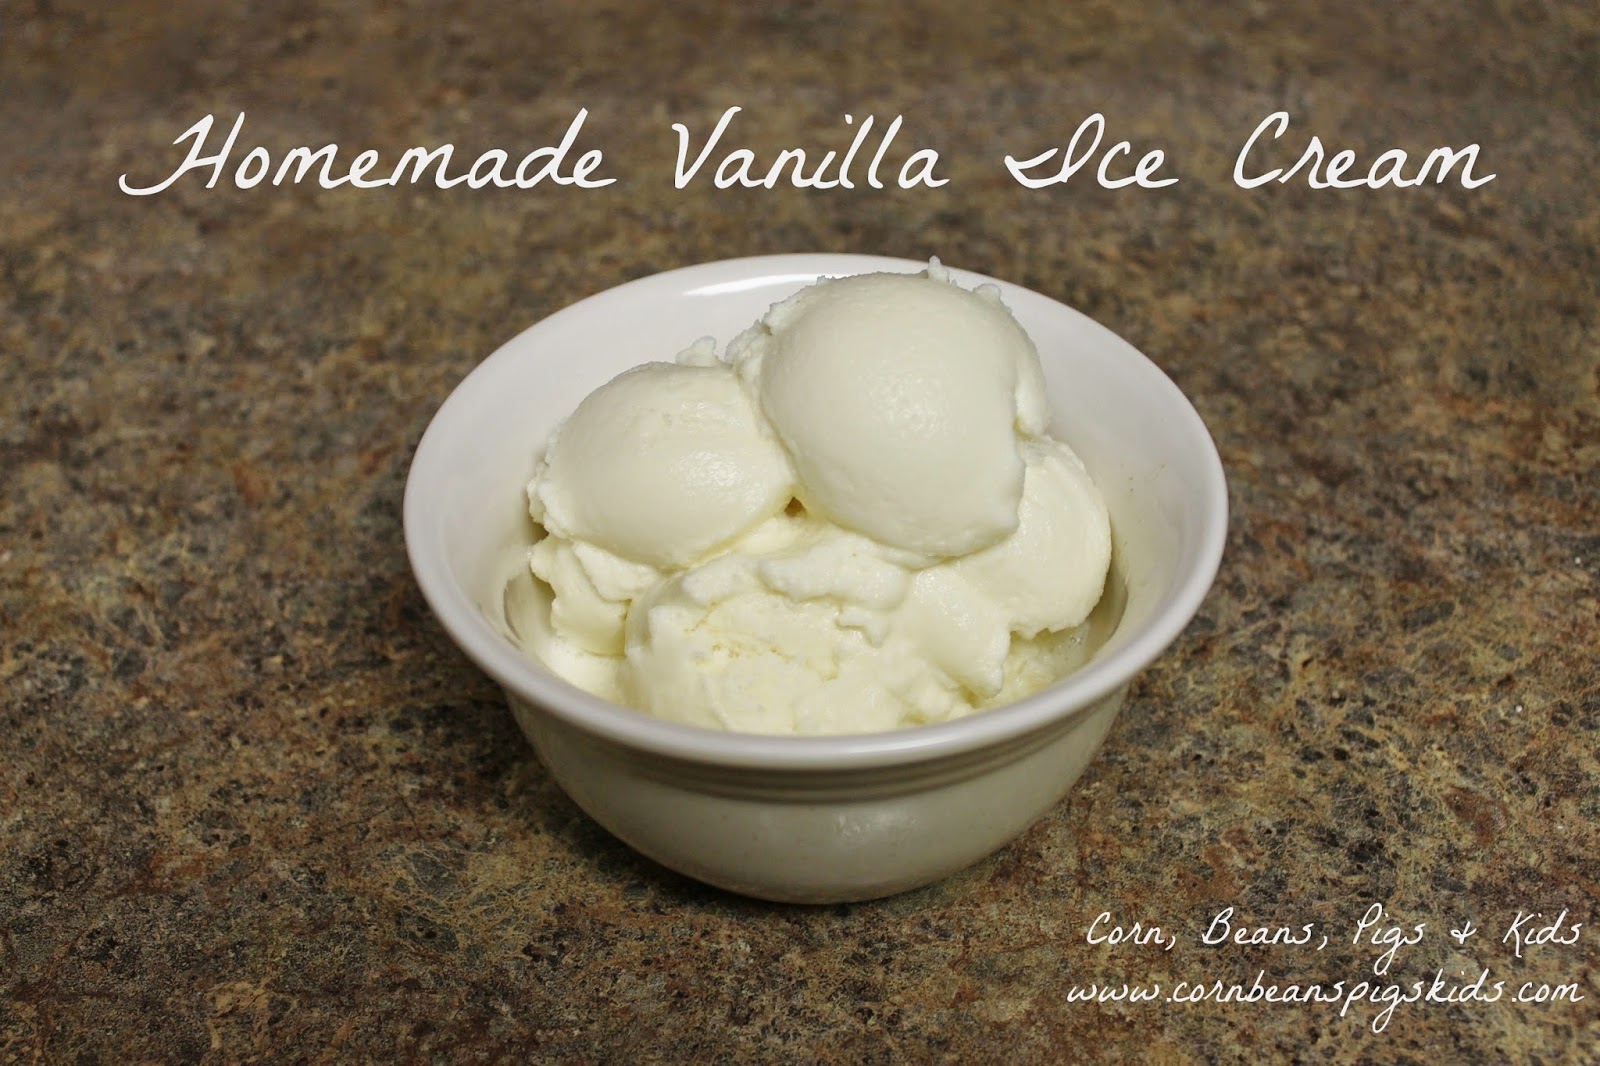 Homemade Vanilla Ice Cream #Recipe - the perfect food to celebrate with